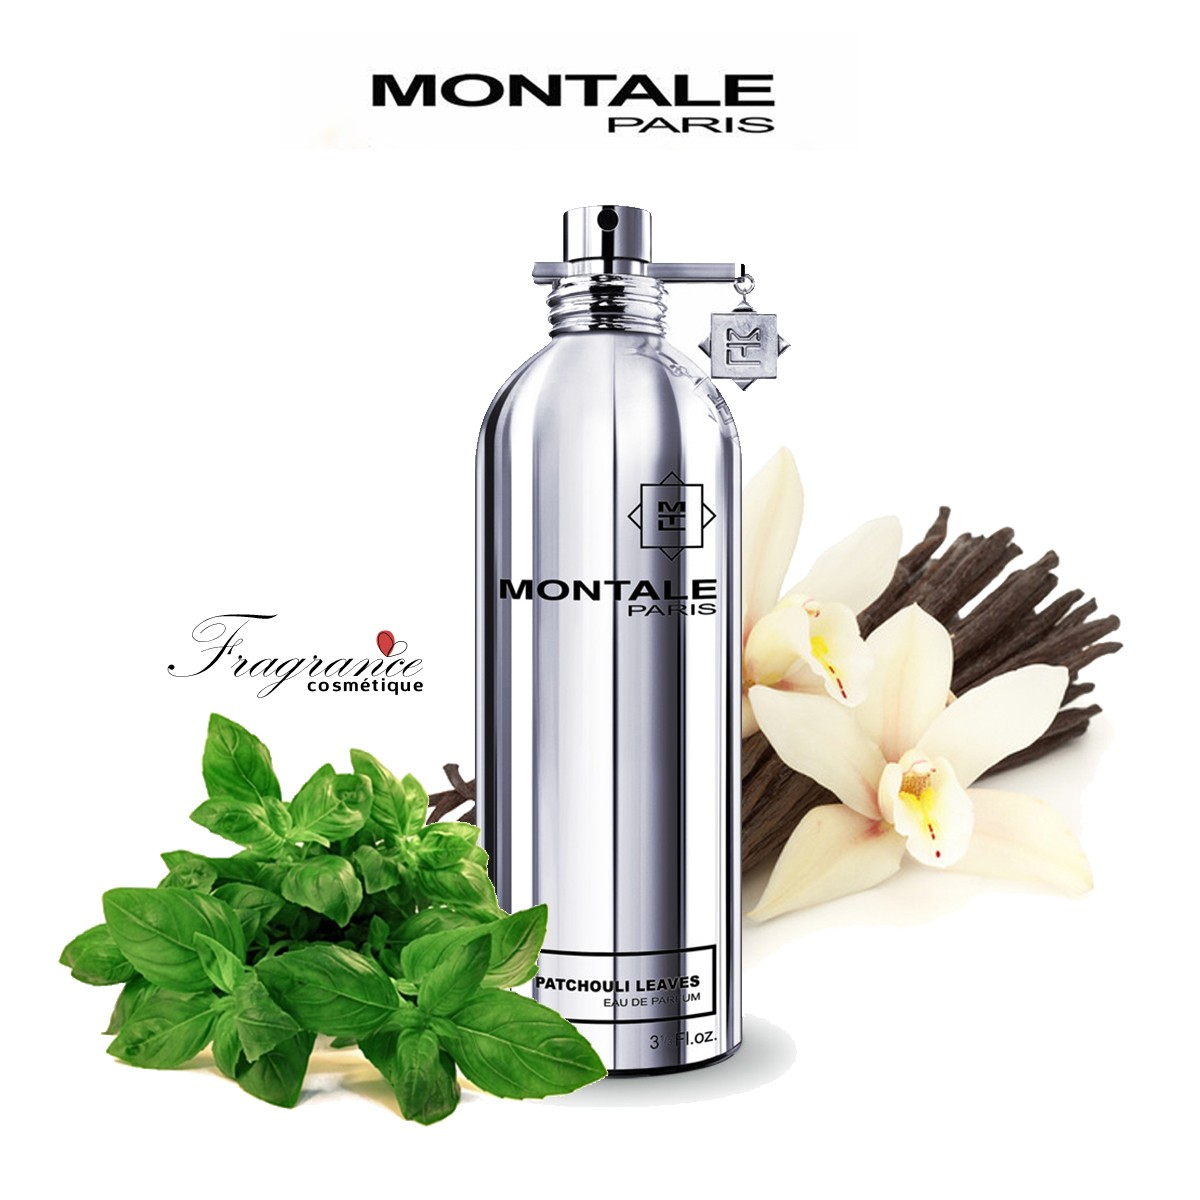 monale_patchoulli_leaves silhat ve vanilya resimli reklam afiş.jpg